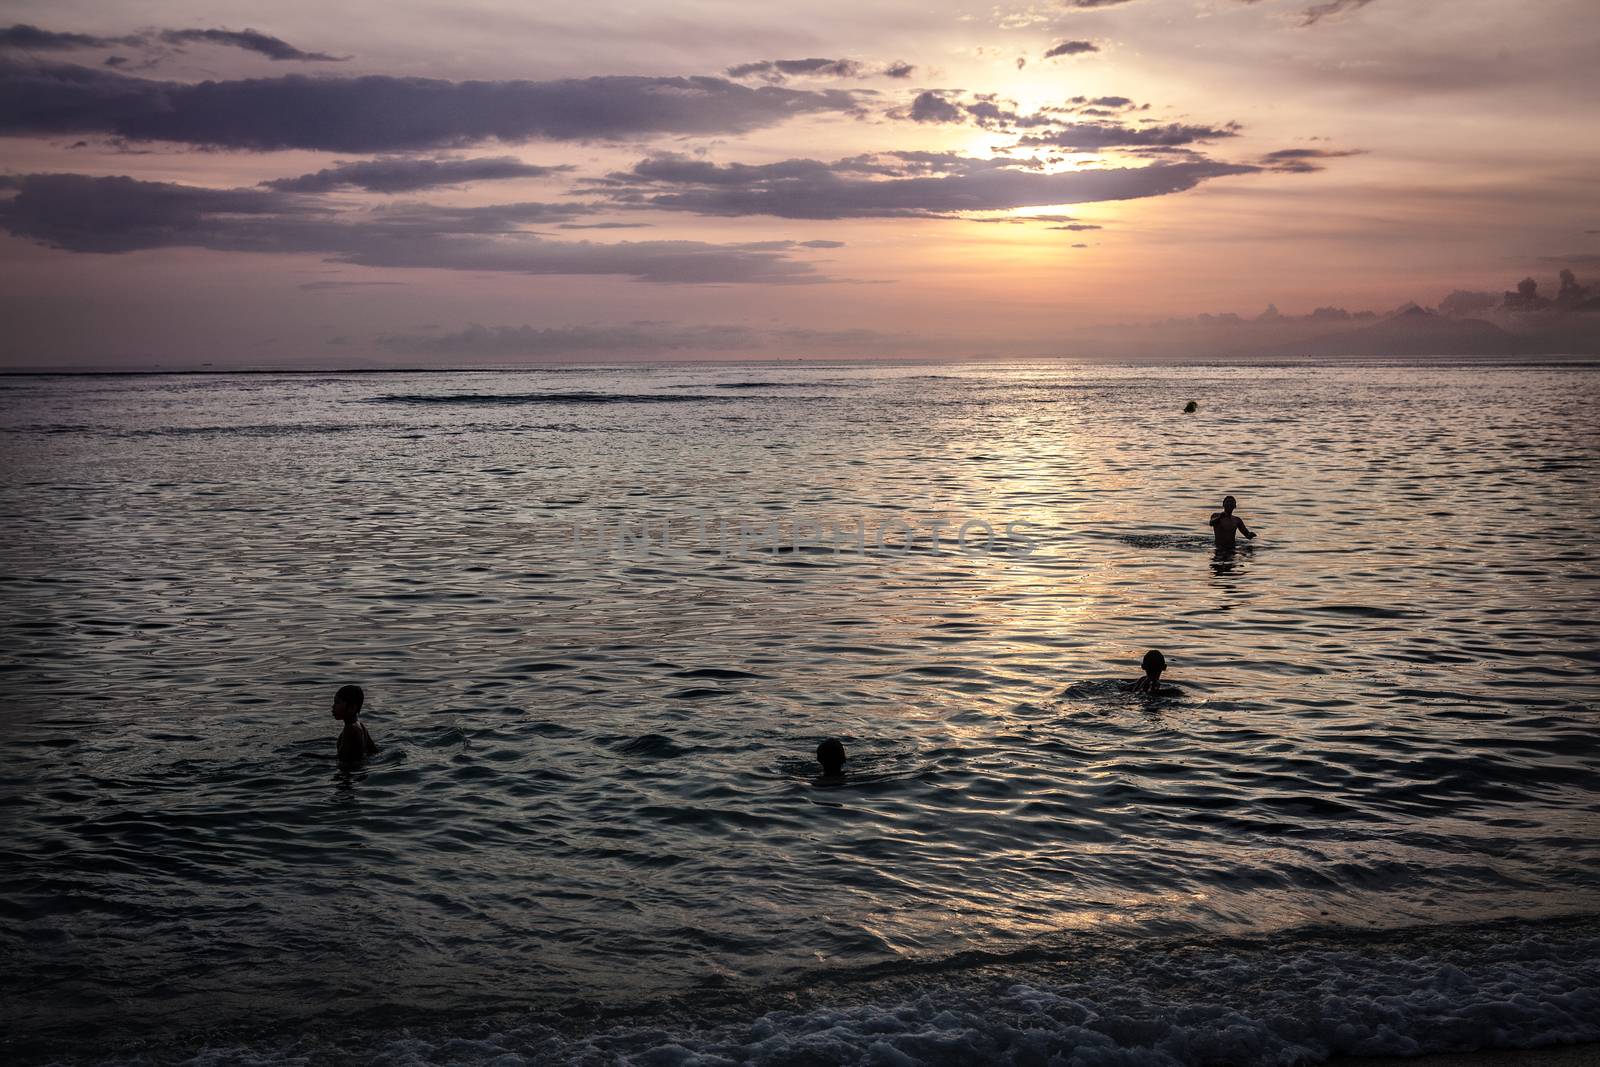 Children swim in the ocean evening sunset at Bali Indonesia